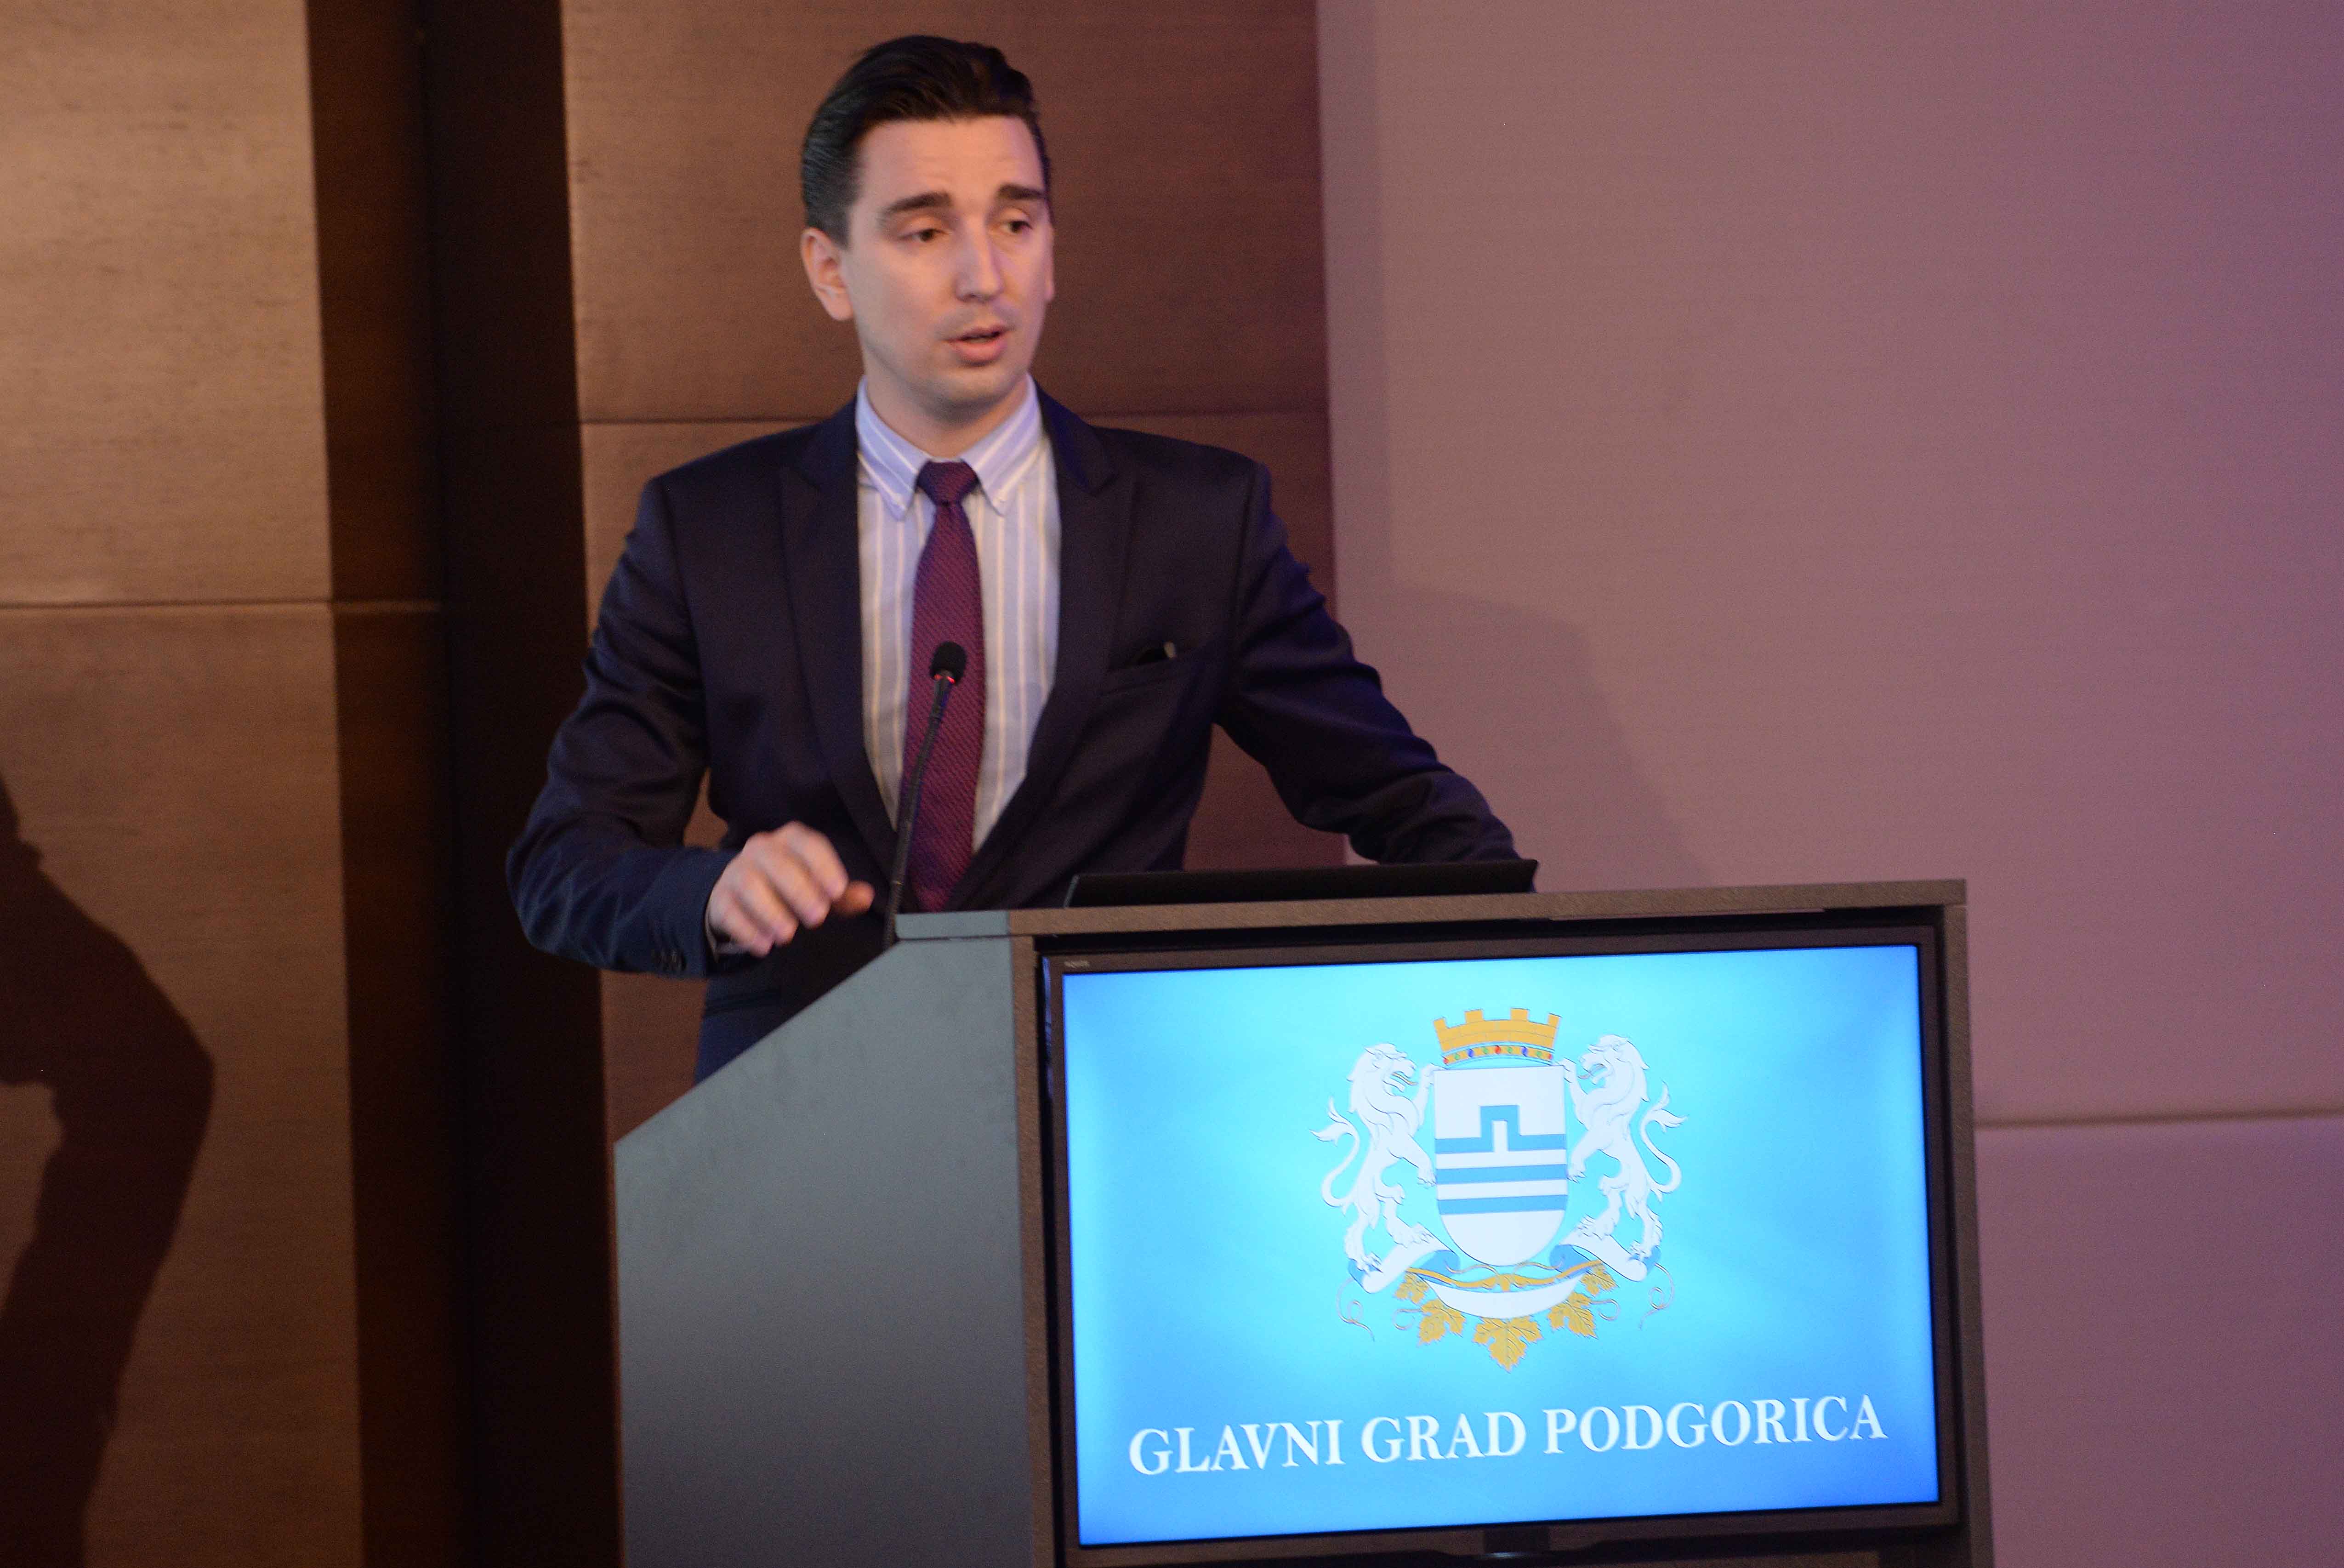 Održan Podgorica Investment Day; Glavni grad predstavio biznis zone